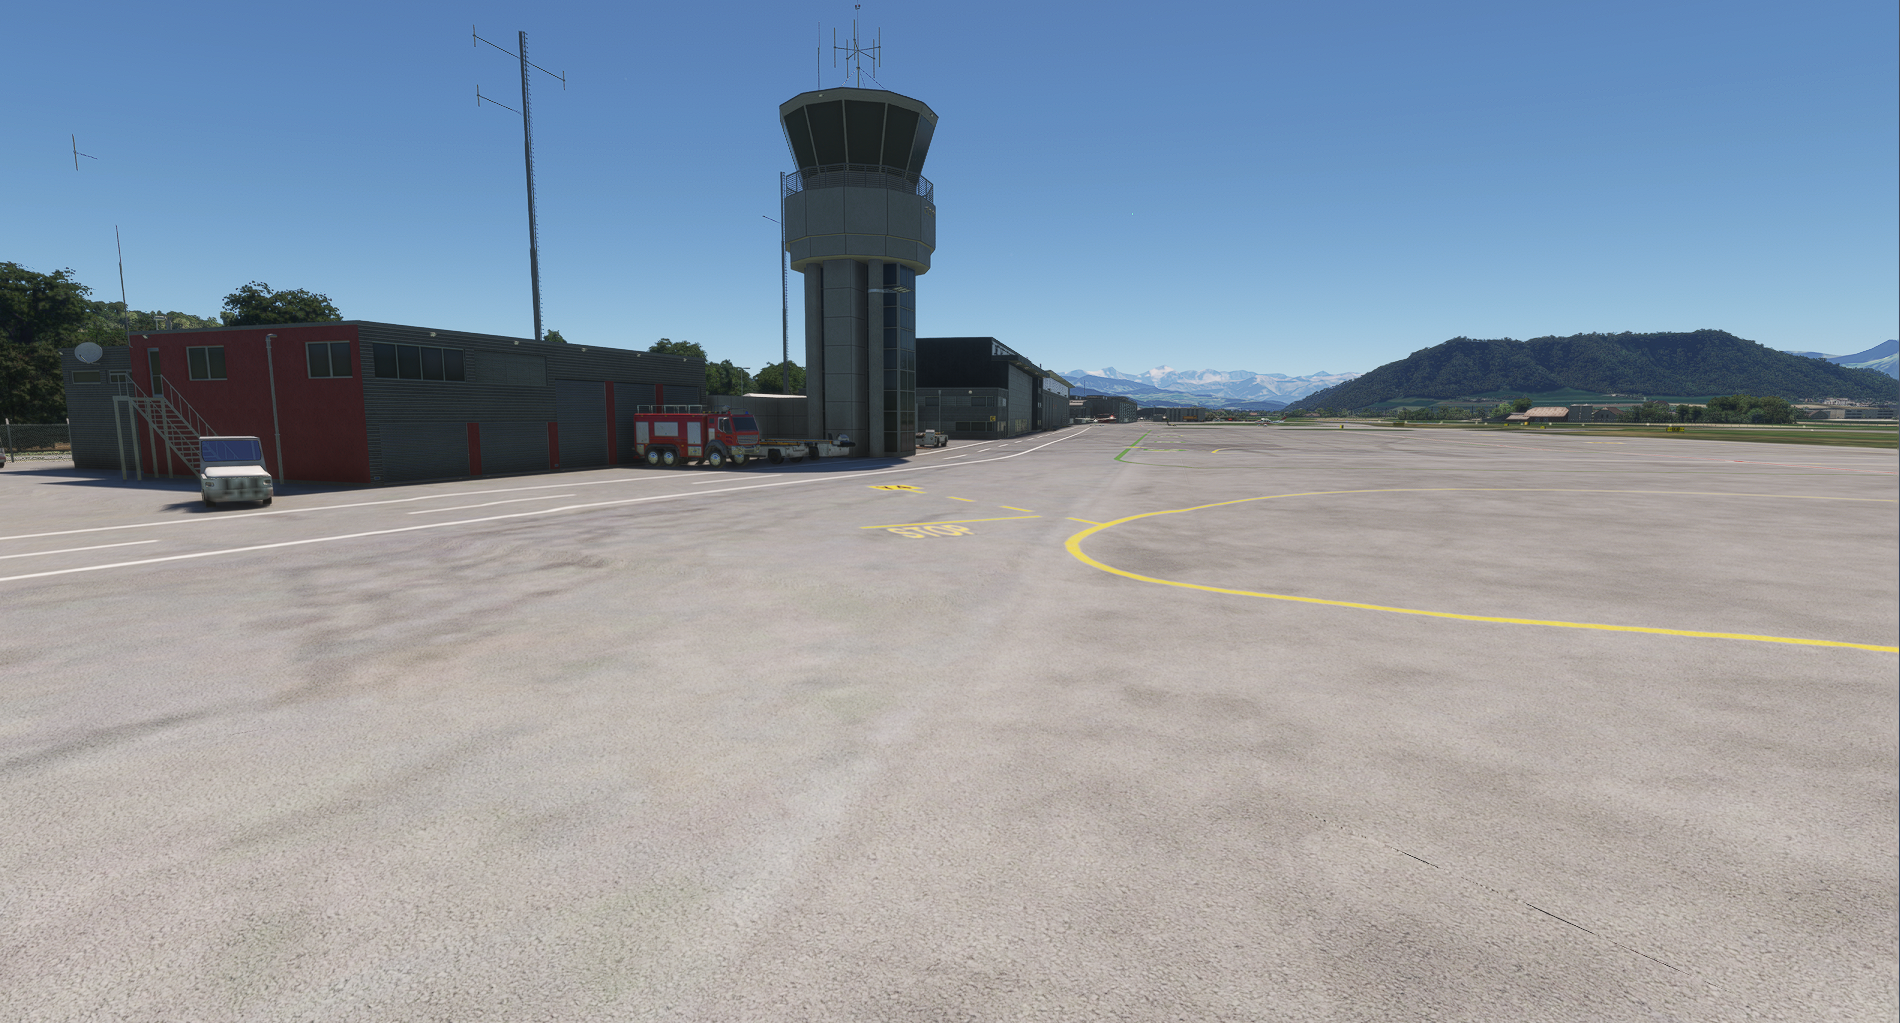 Bern-Airport.png?rlkey=3v8cex8ngj0mfxkt8